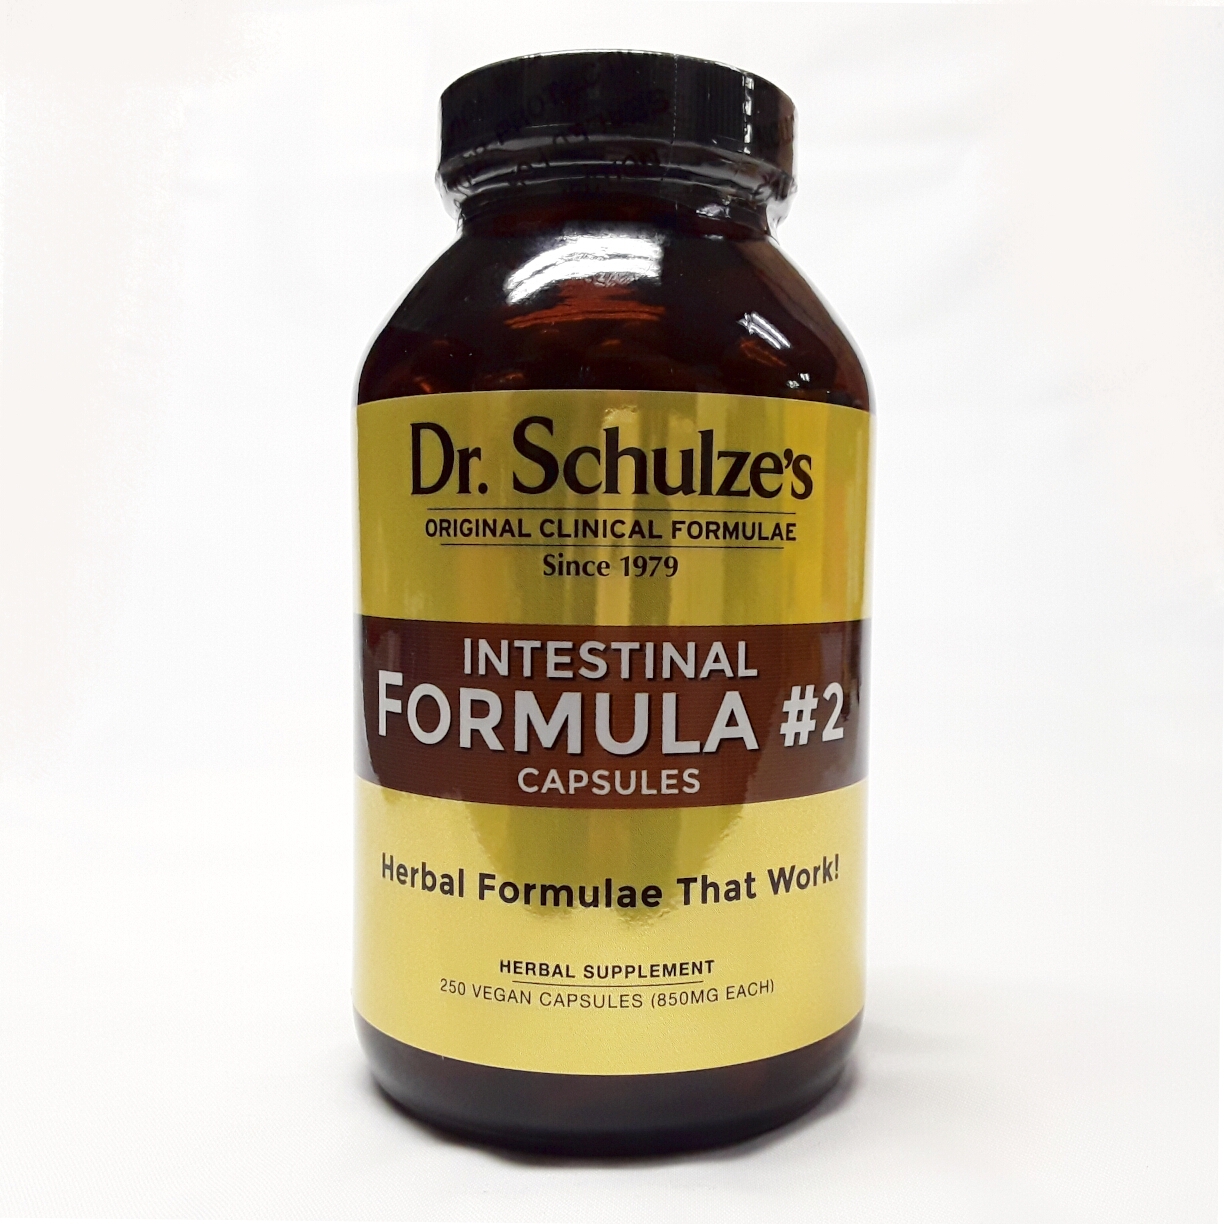 Dr Schulzes Intestinal Formula 2 Capsules Website Product Image View 1